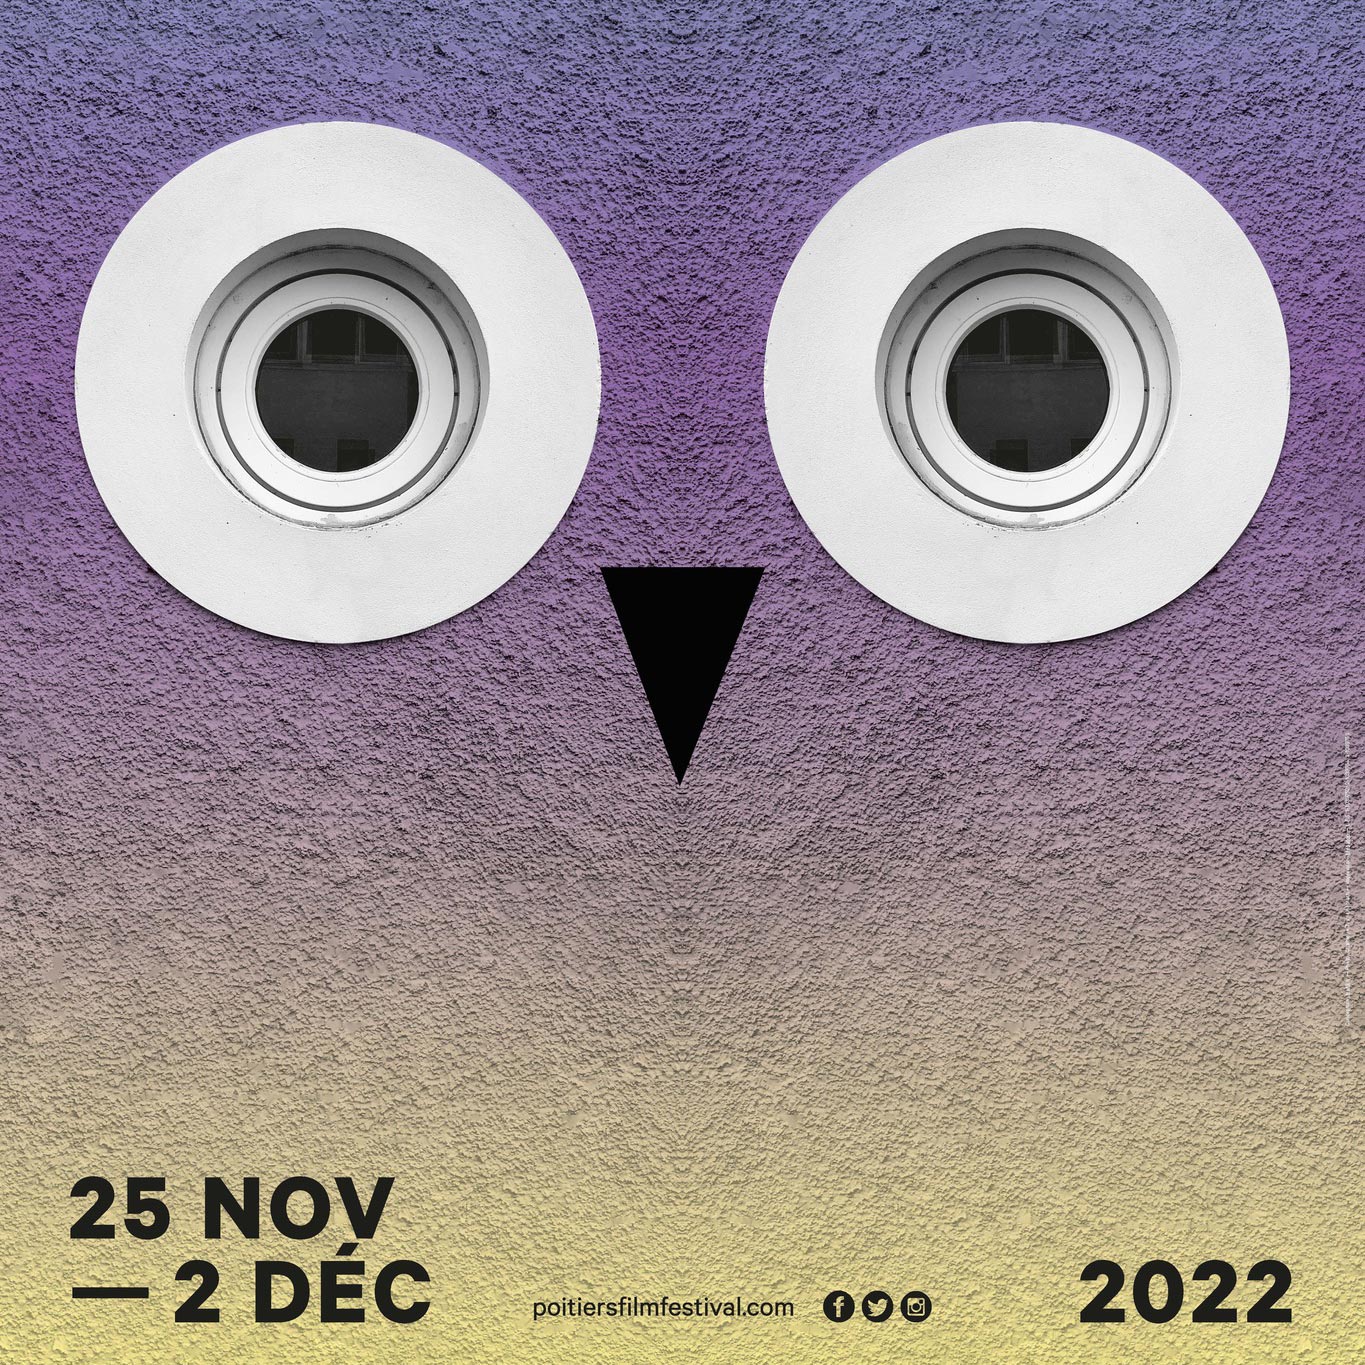 Affiche Poitiers Film Festival 2022